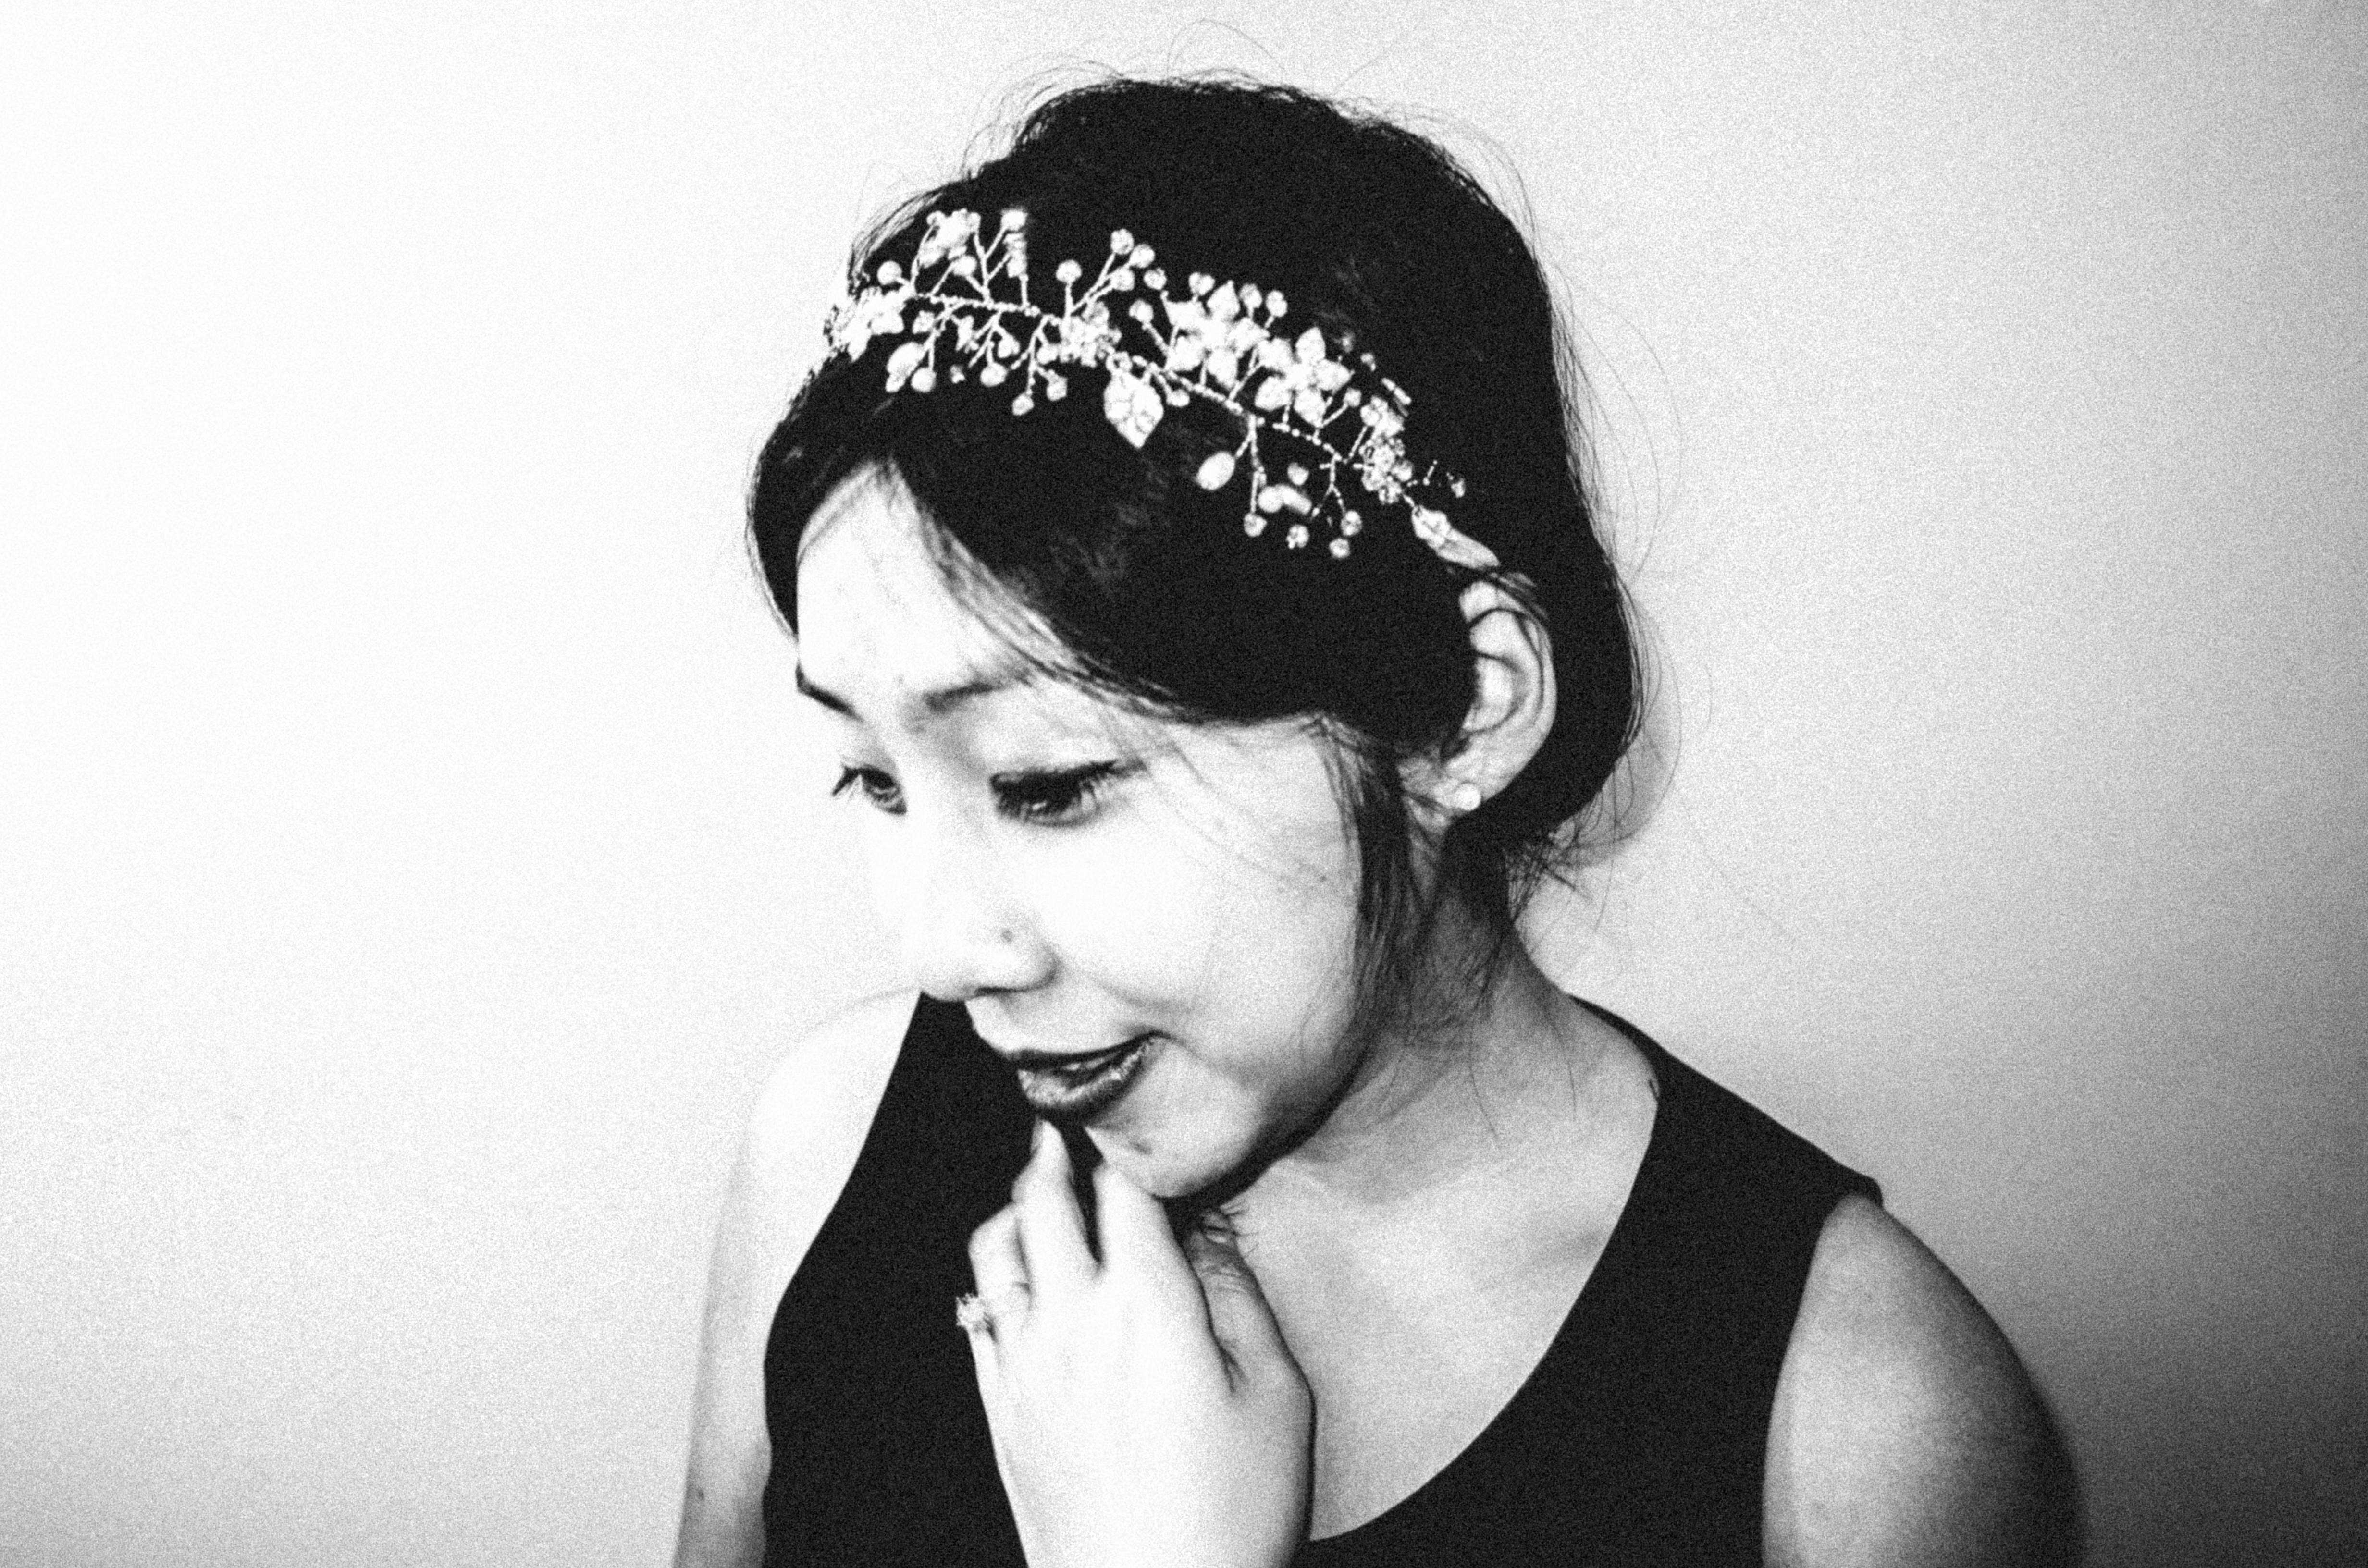 eric kim photography - Cindy Project - black and white-7-headband-portrait